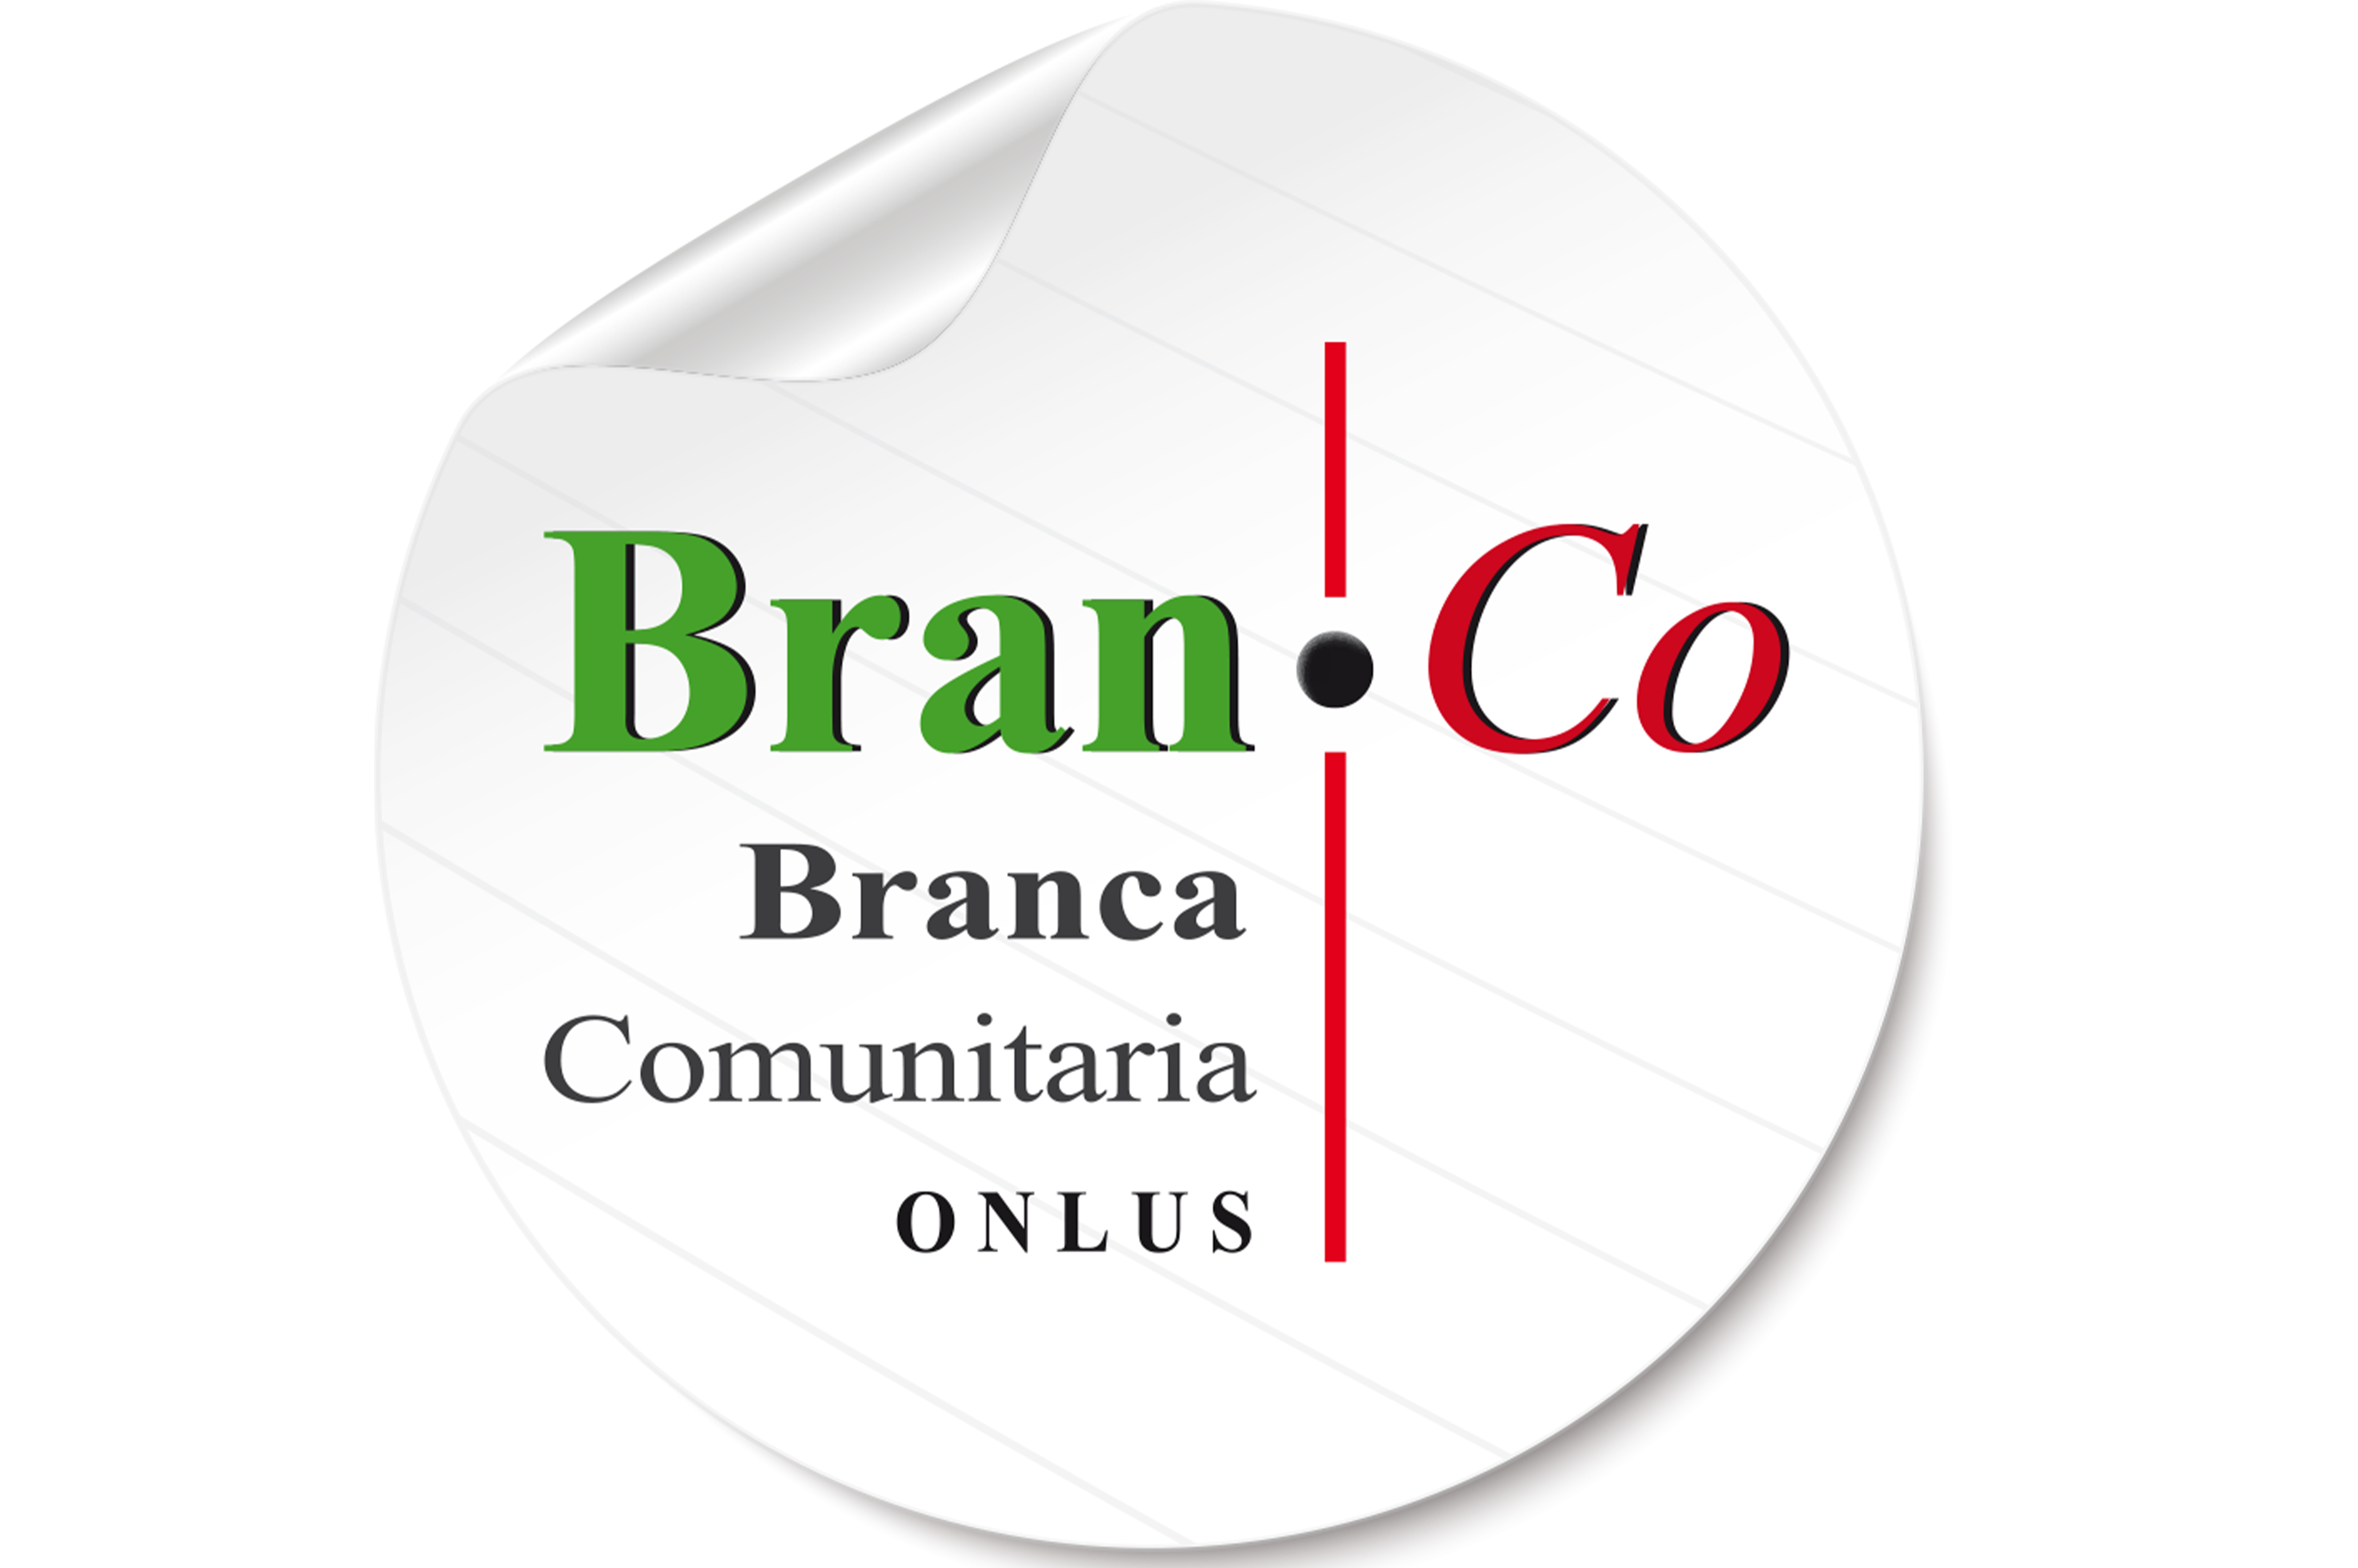 Bran-Co Branca Comunitaria Onlus